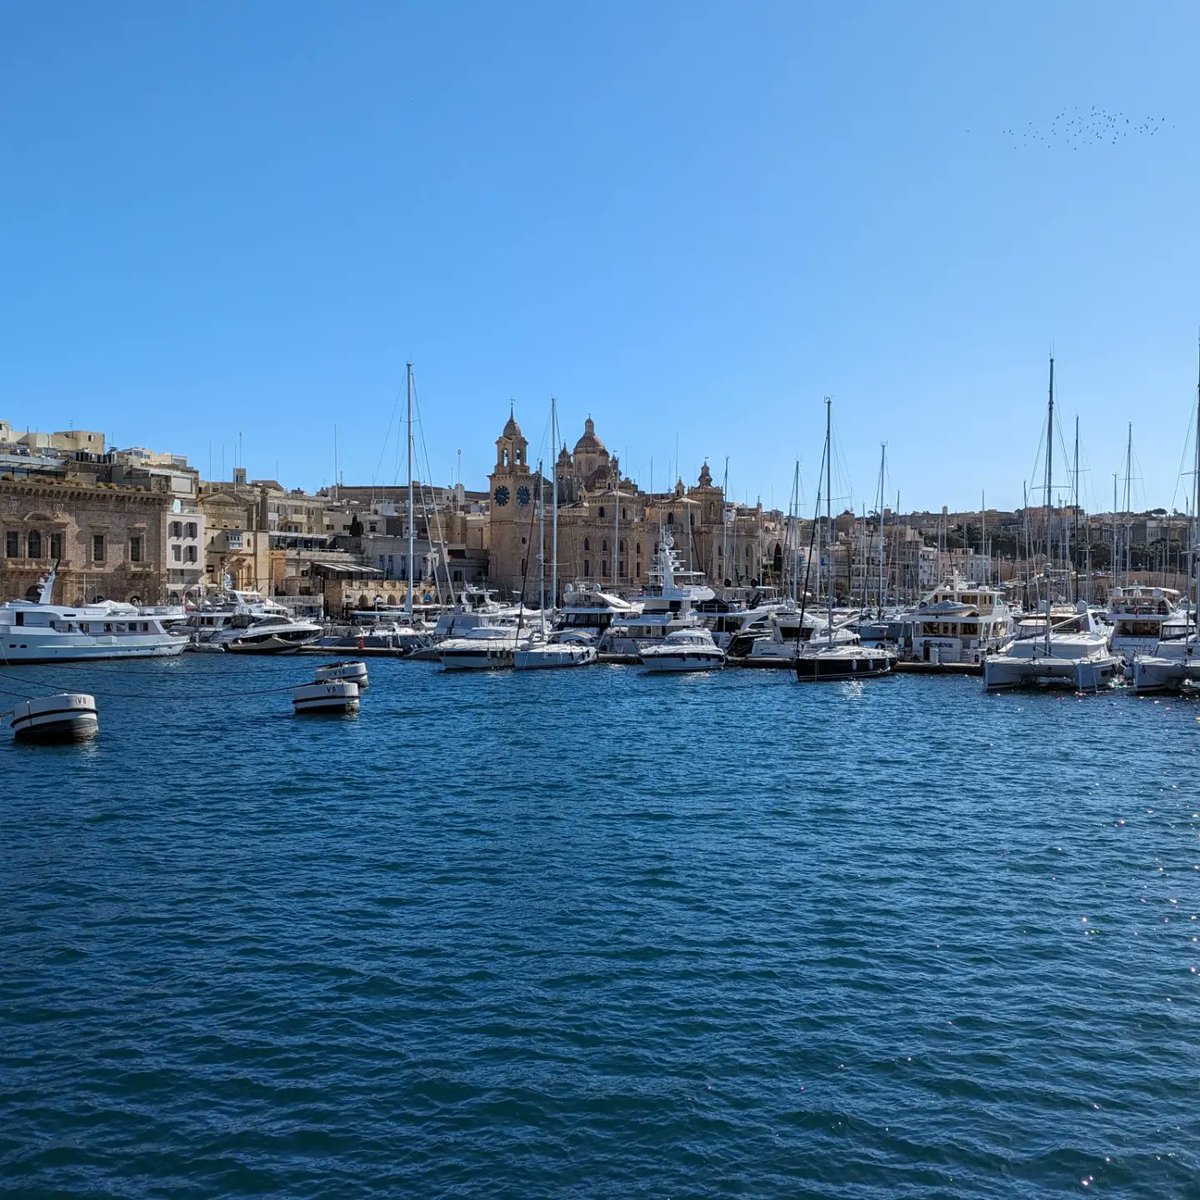 Valletta & three citys harbour tour 

#valletta #vallettamalta #vallettawaterfront #sliema #sliemamalta #sliemawaterfront #sliemaferries #harbourtour #harbour #grandharbourmalta #iseemalta #weshowyoumalta #citysightseeing #malta #visitmalta #sightseeing

@VisitMalta @VisitMaltaUK